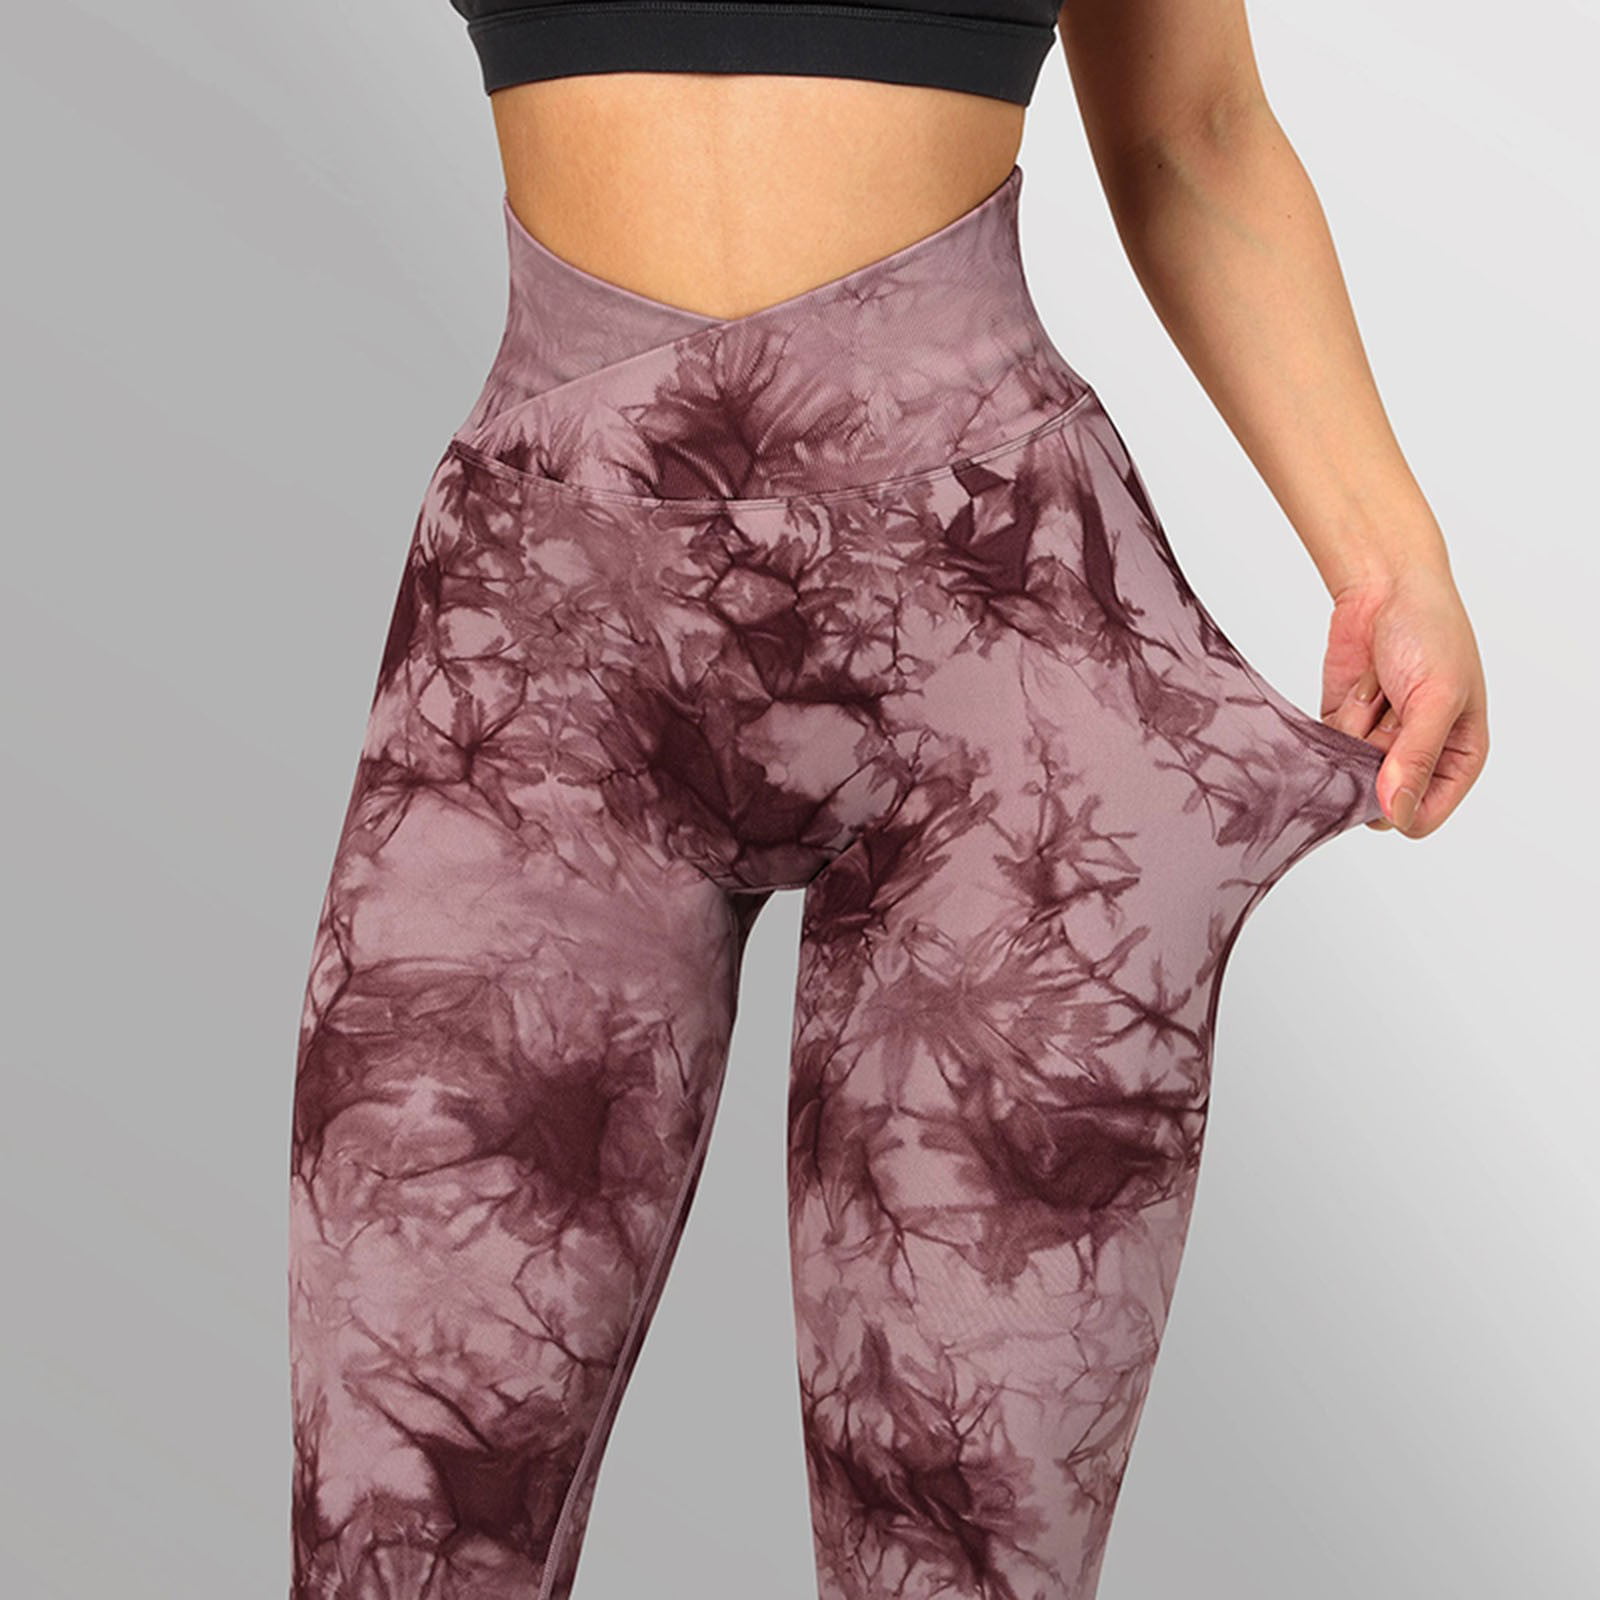 Aayomet Leggings With Pockets for Women Yoga Pants Tie Dye Lift Ladies  Sports Yoga Pants (, S) 